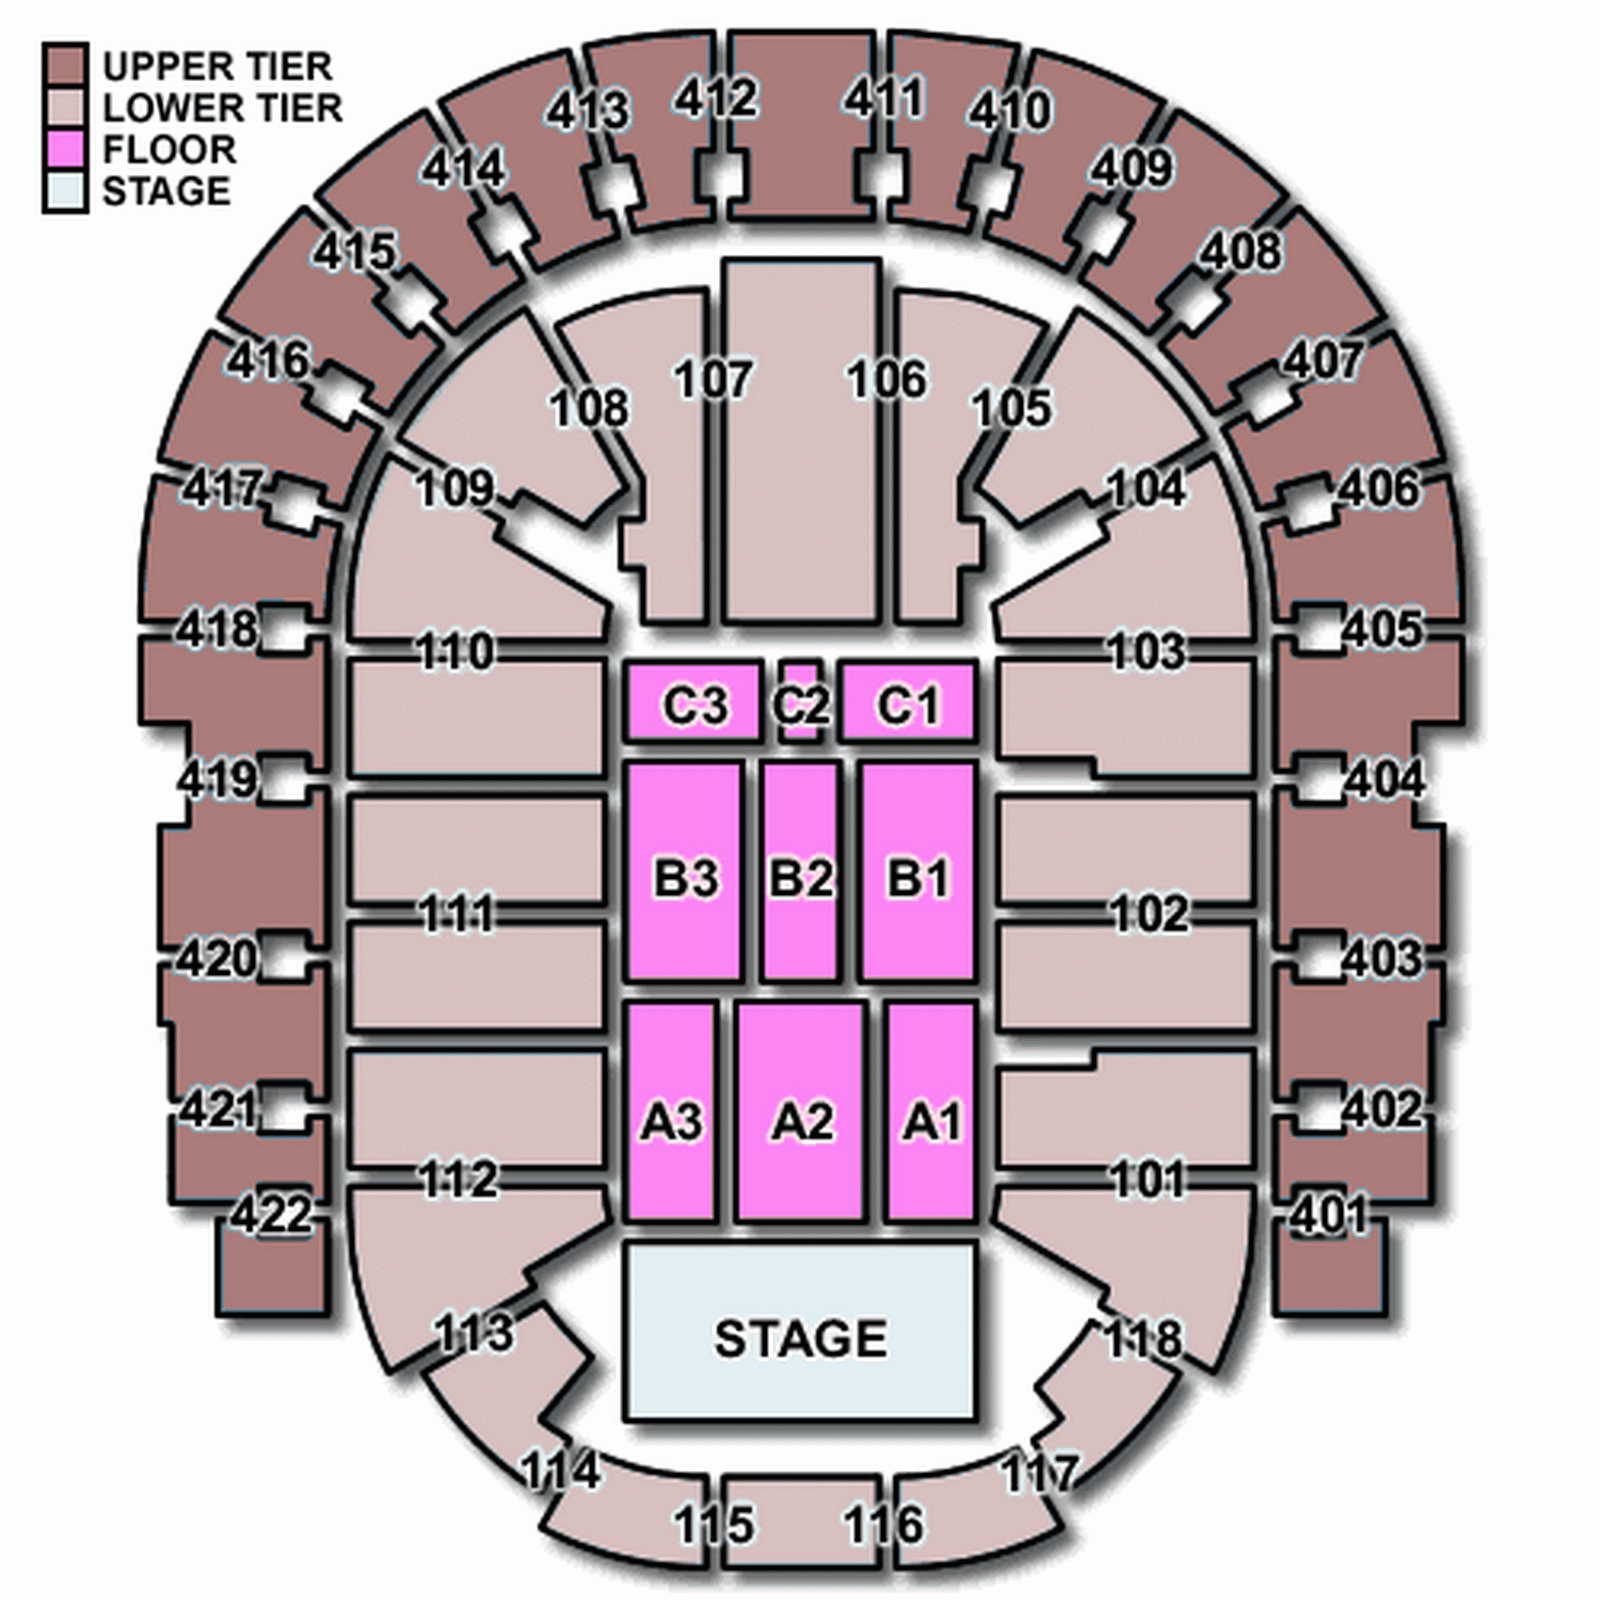 O2 Arena London seating plan Detailed seat numbers